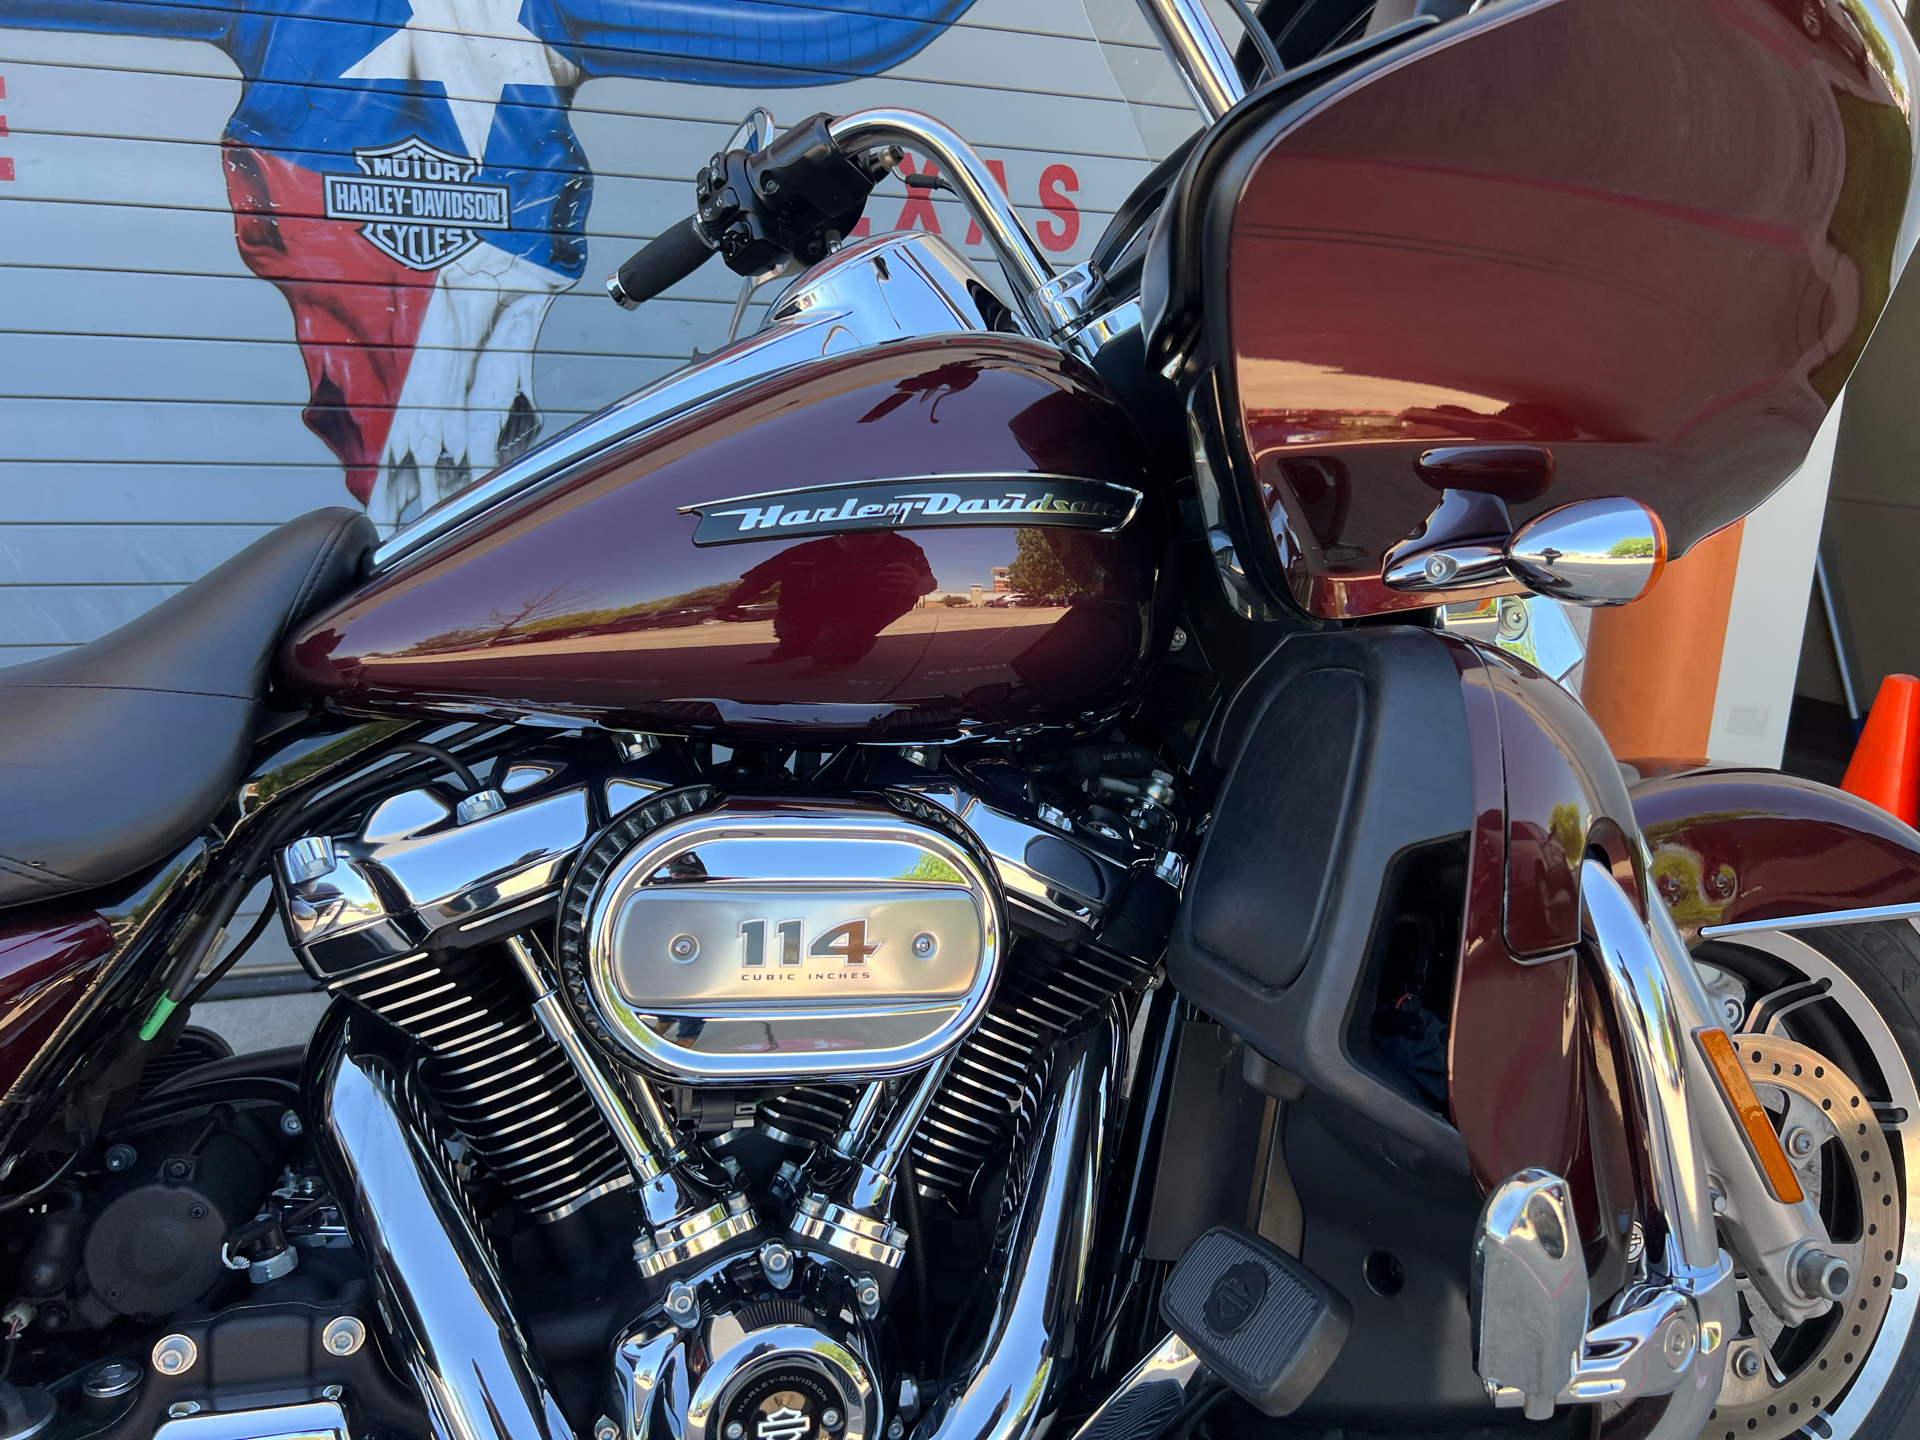 2019 Harley-Davidson Road Glide® Ultra in Grand Prairie, Texas - Photo 2